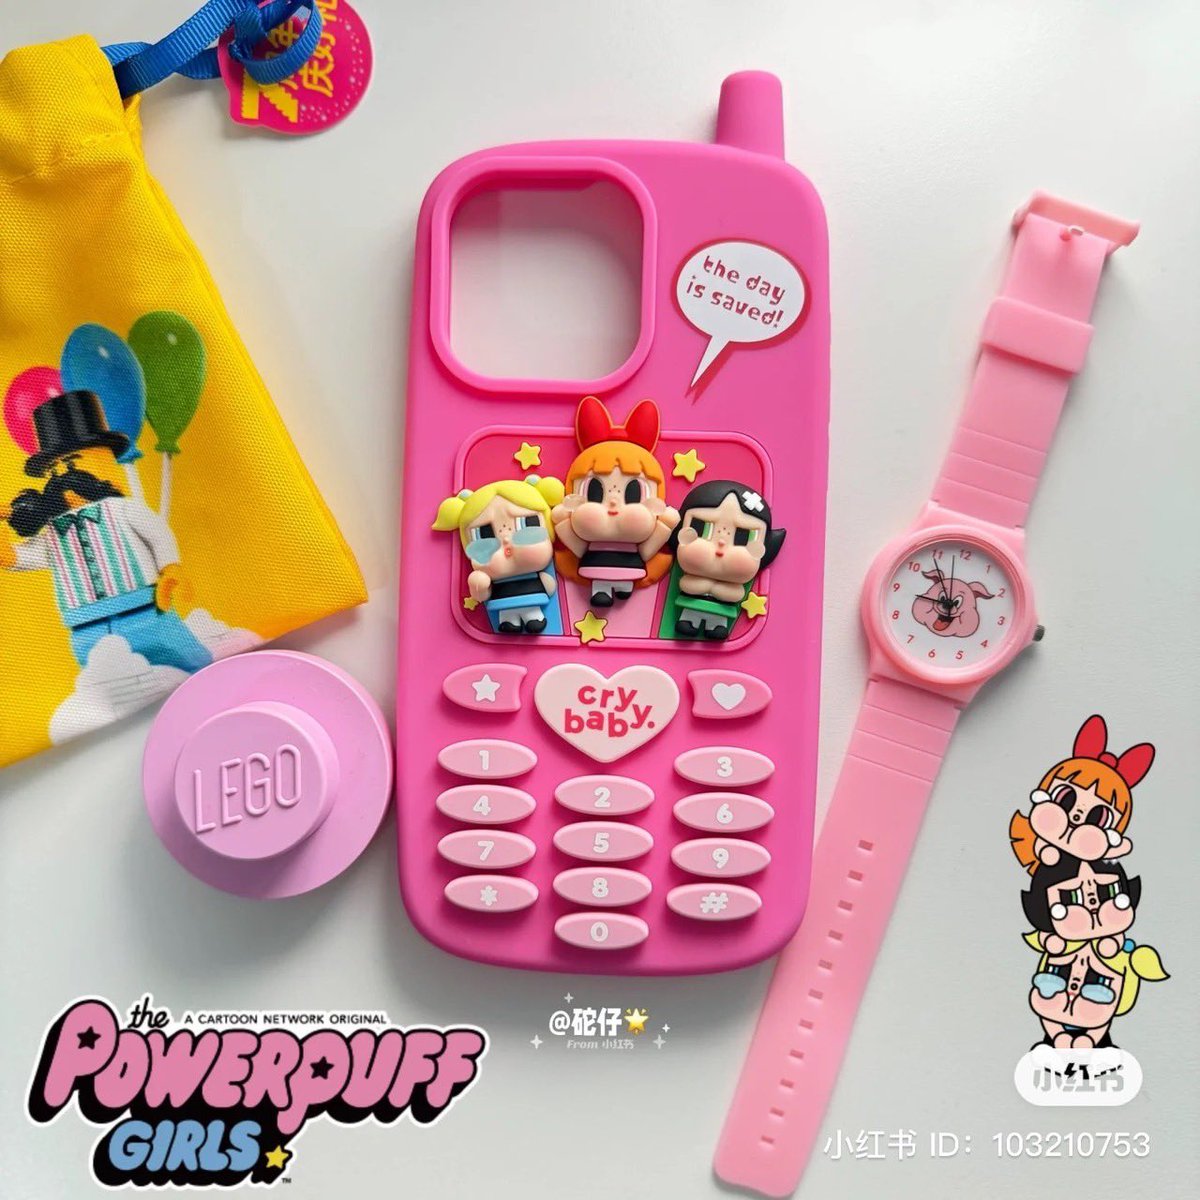 🌷Pre-0rder เริ่มส่งจากจีน 12/05/67🌷

✨น้อง crybabyxpowerpuffgirls ยังมีอยู่นะคะ สนใจรุ่นไหนทักแชทได้เลยค่า

ทรงหัวใจ - 1,300 บาท
ทรงกระบอก - 1,150 บาท
เคส Iphone 14/15 promax - 990 บาท

🇨🇳รอสินค้า 10-14 วันค่ะ
#crybabyxpowerpuffgirls #ตลาดนัดcrybaby #ตลาดนัดpopmart #รับพรี